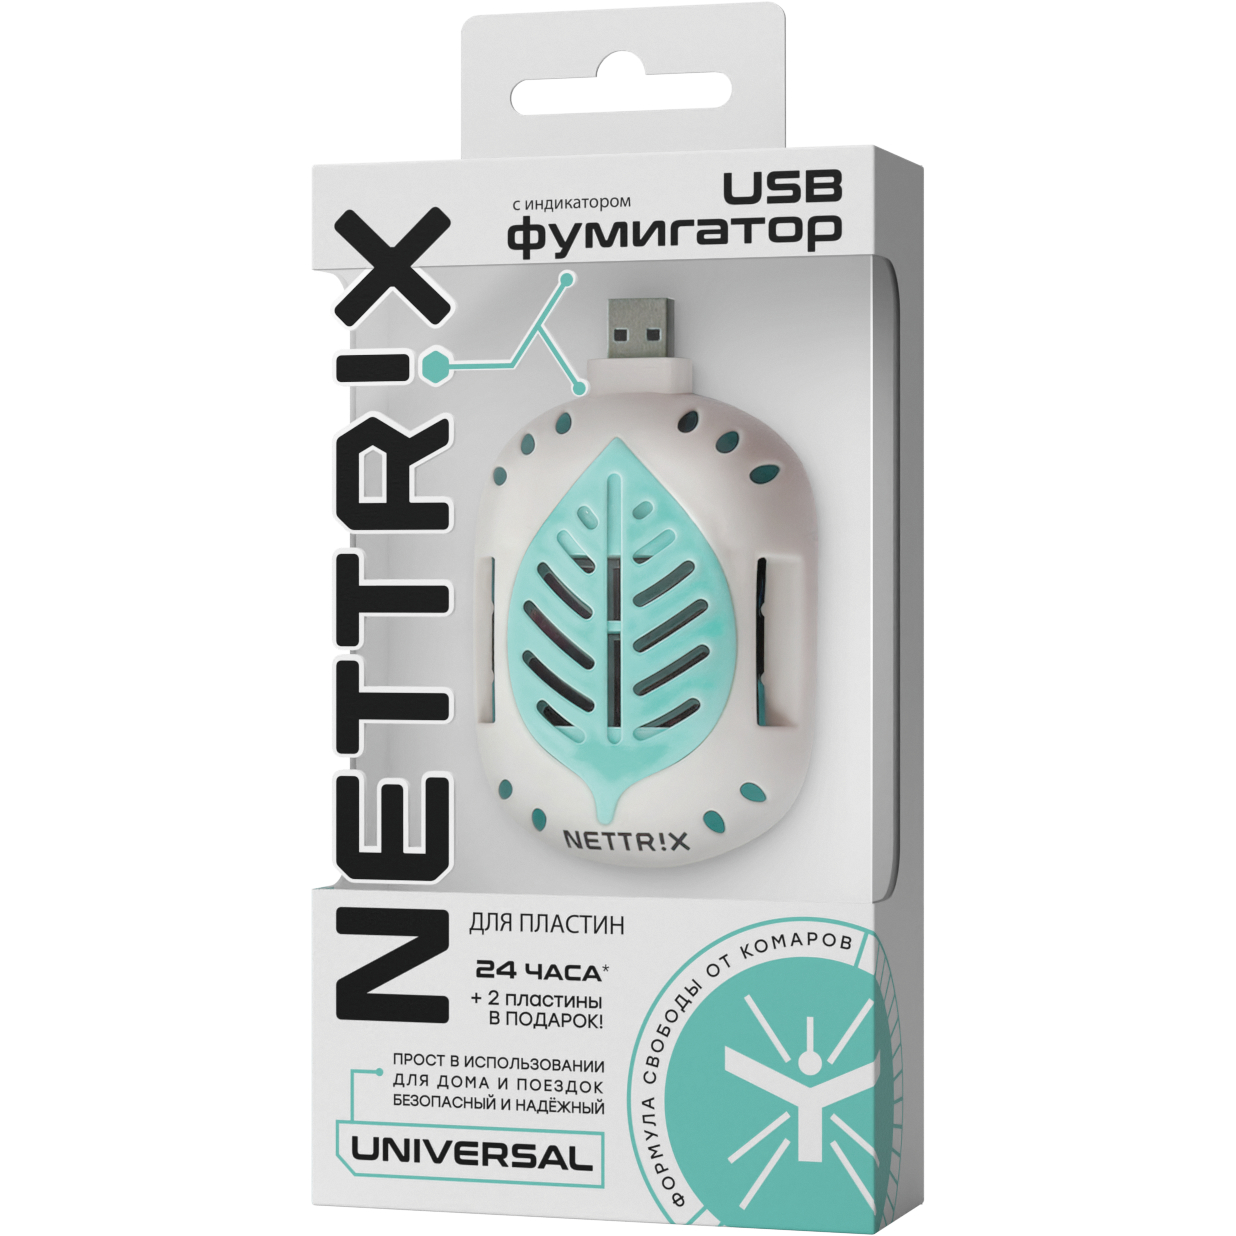 Фумигатор USB Nettrix Universal для пластин жидкость от комаров nettrix universal на 30 ночей 29 мл